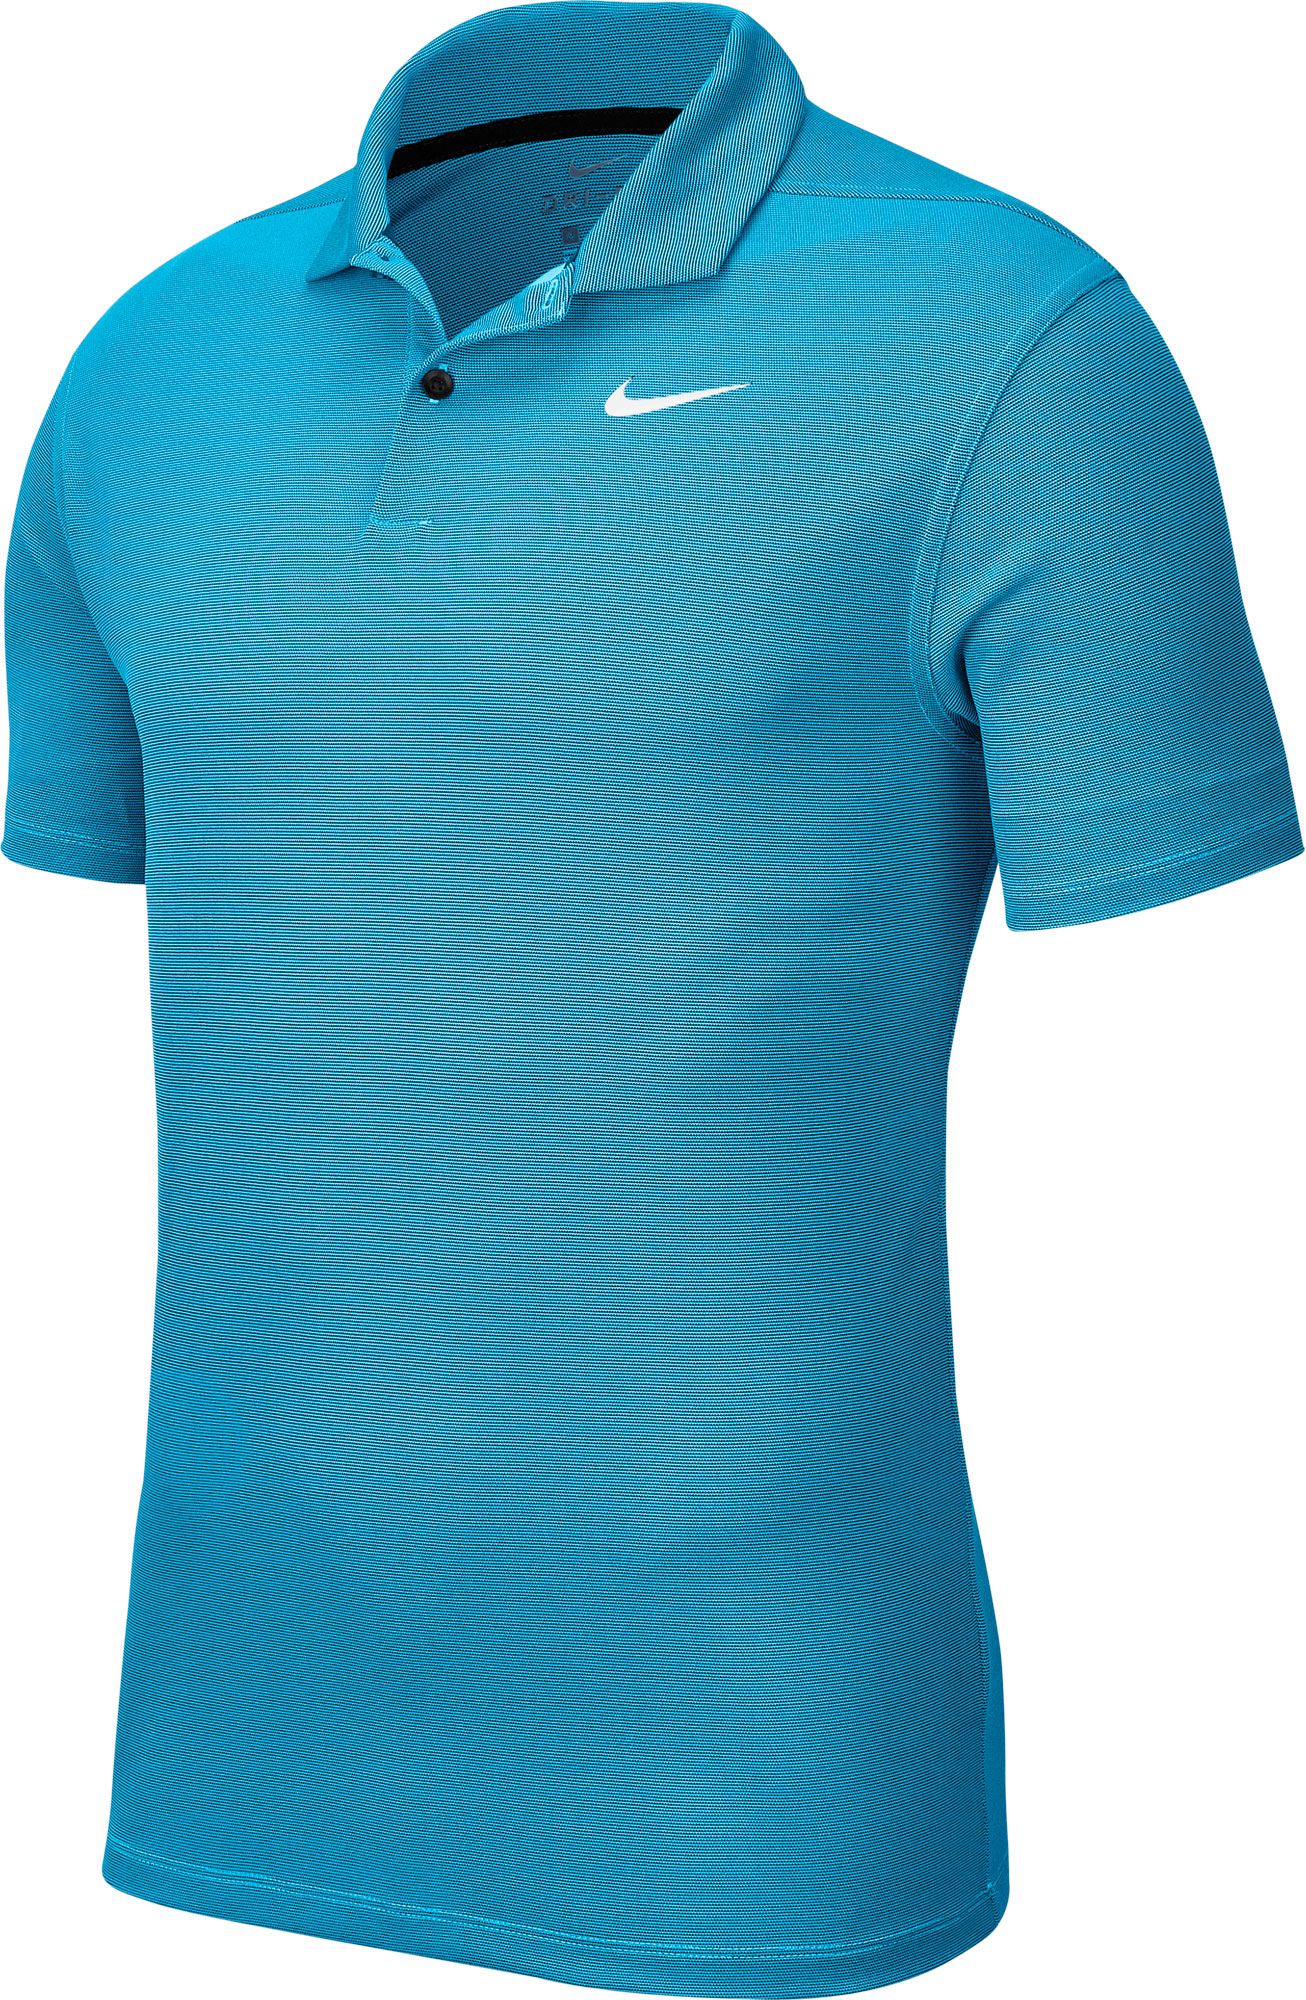 blue nike golf shirt